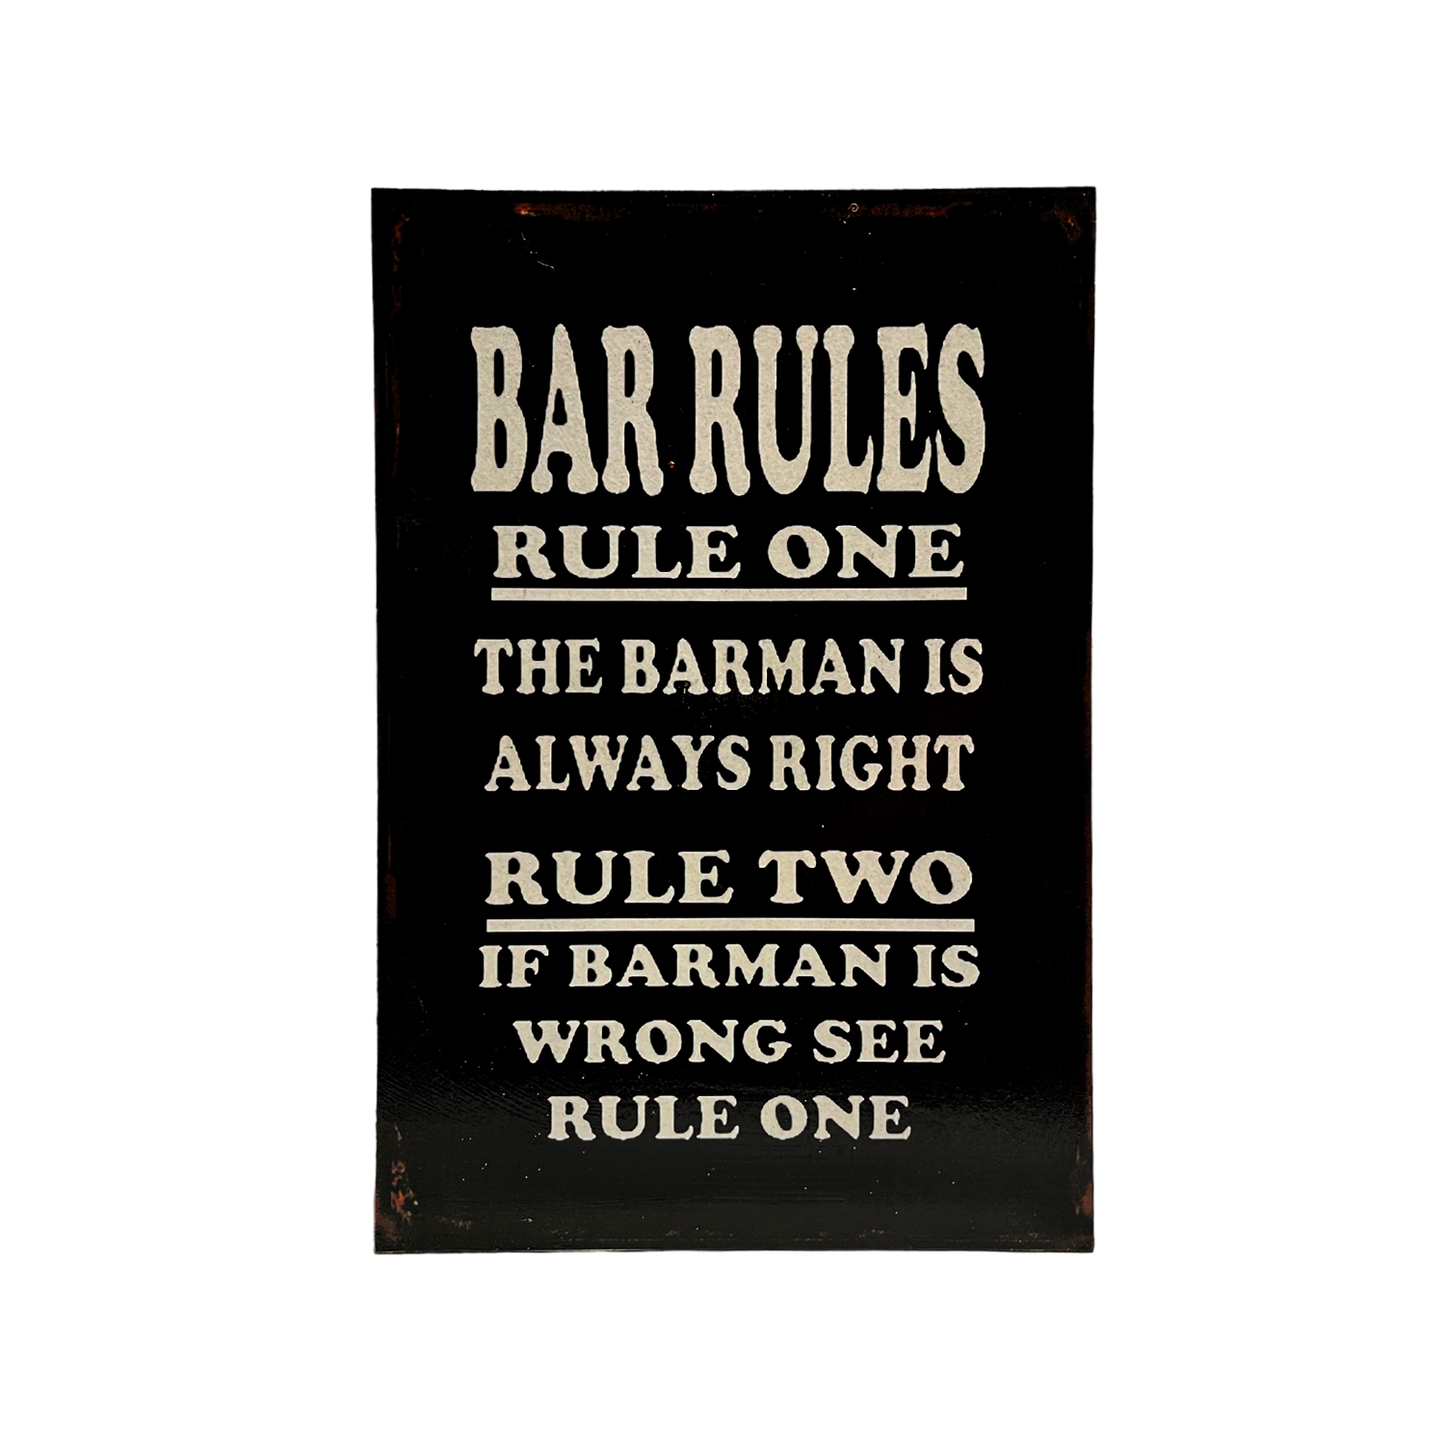 Afiche "Bar rules"